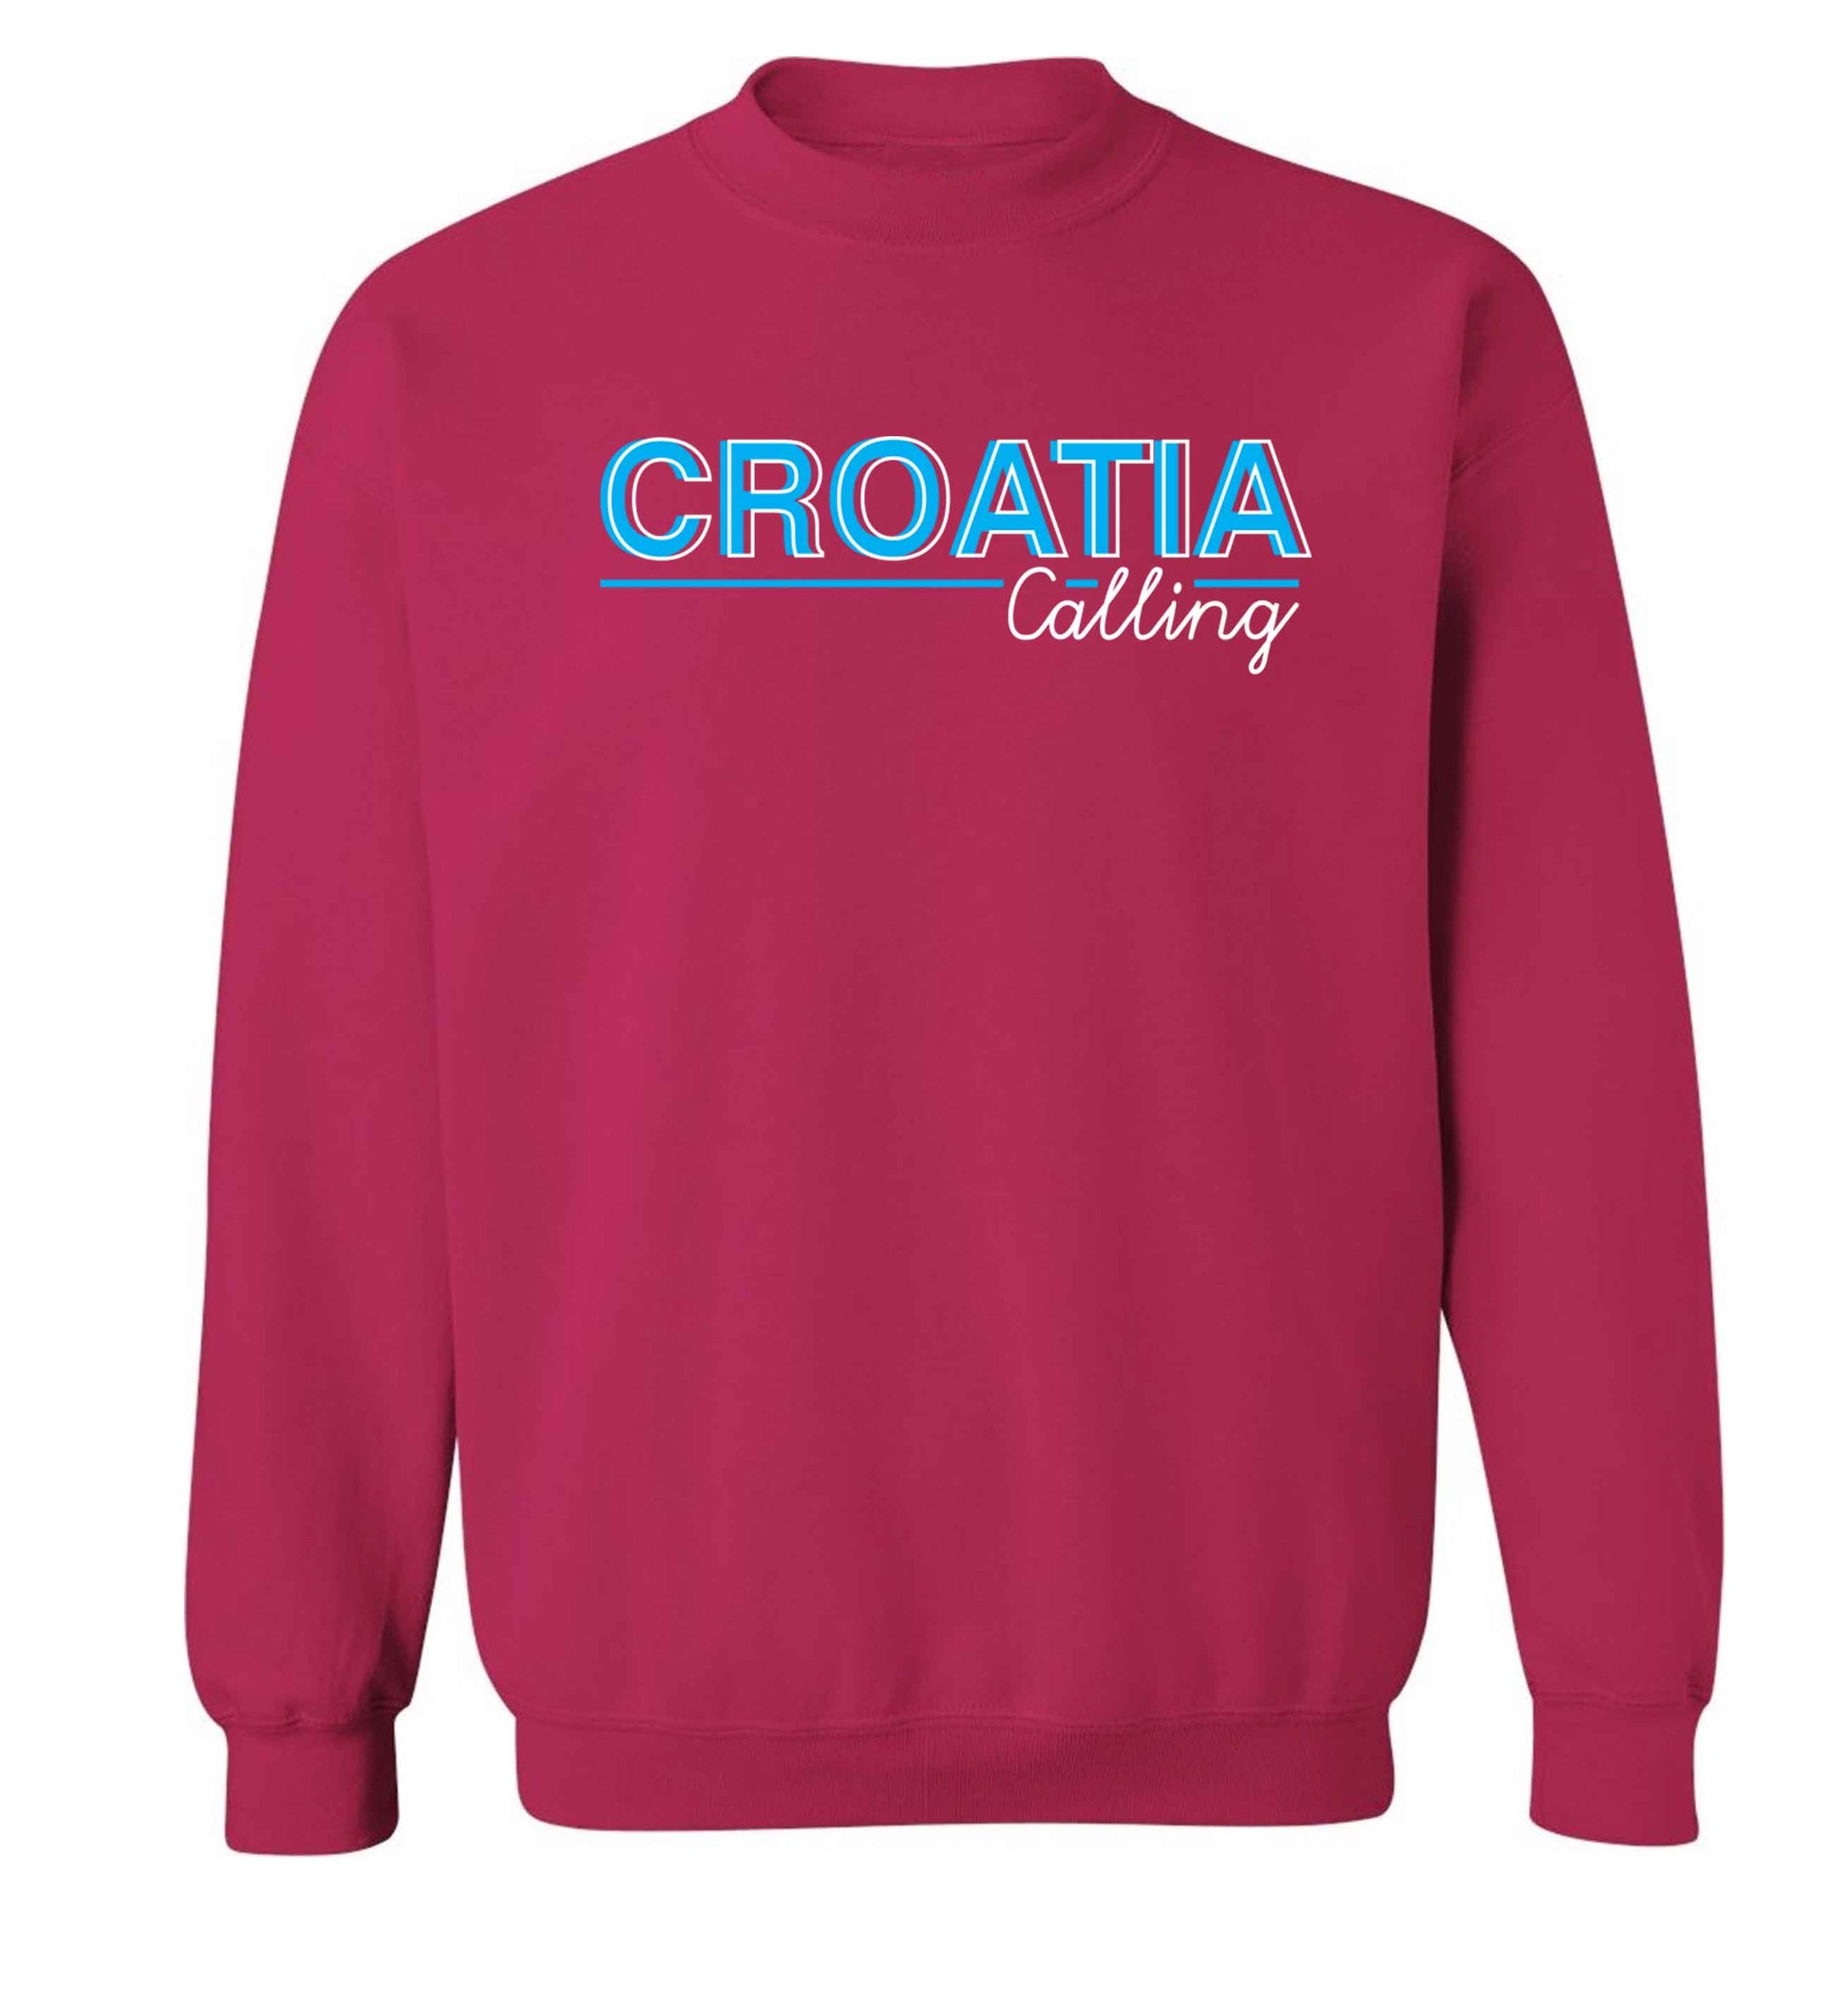 Croatia calling Adult's unisex pink Sweater 2XL